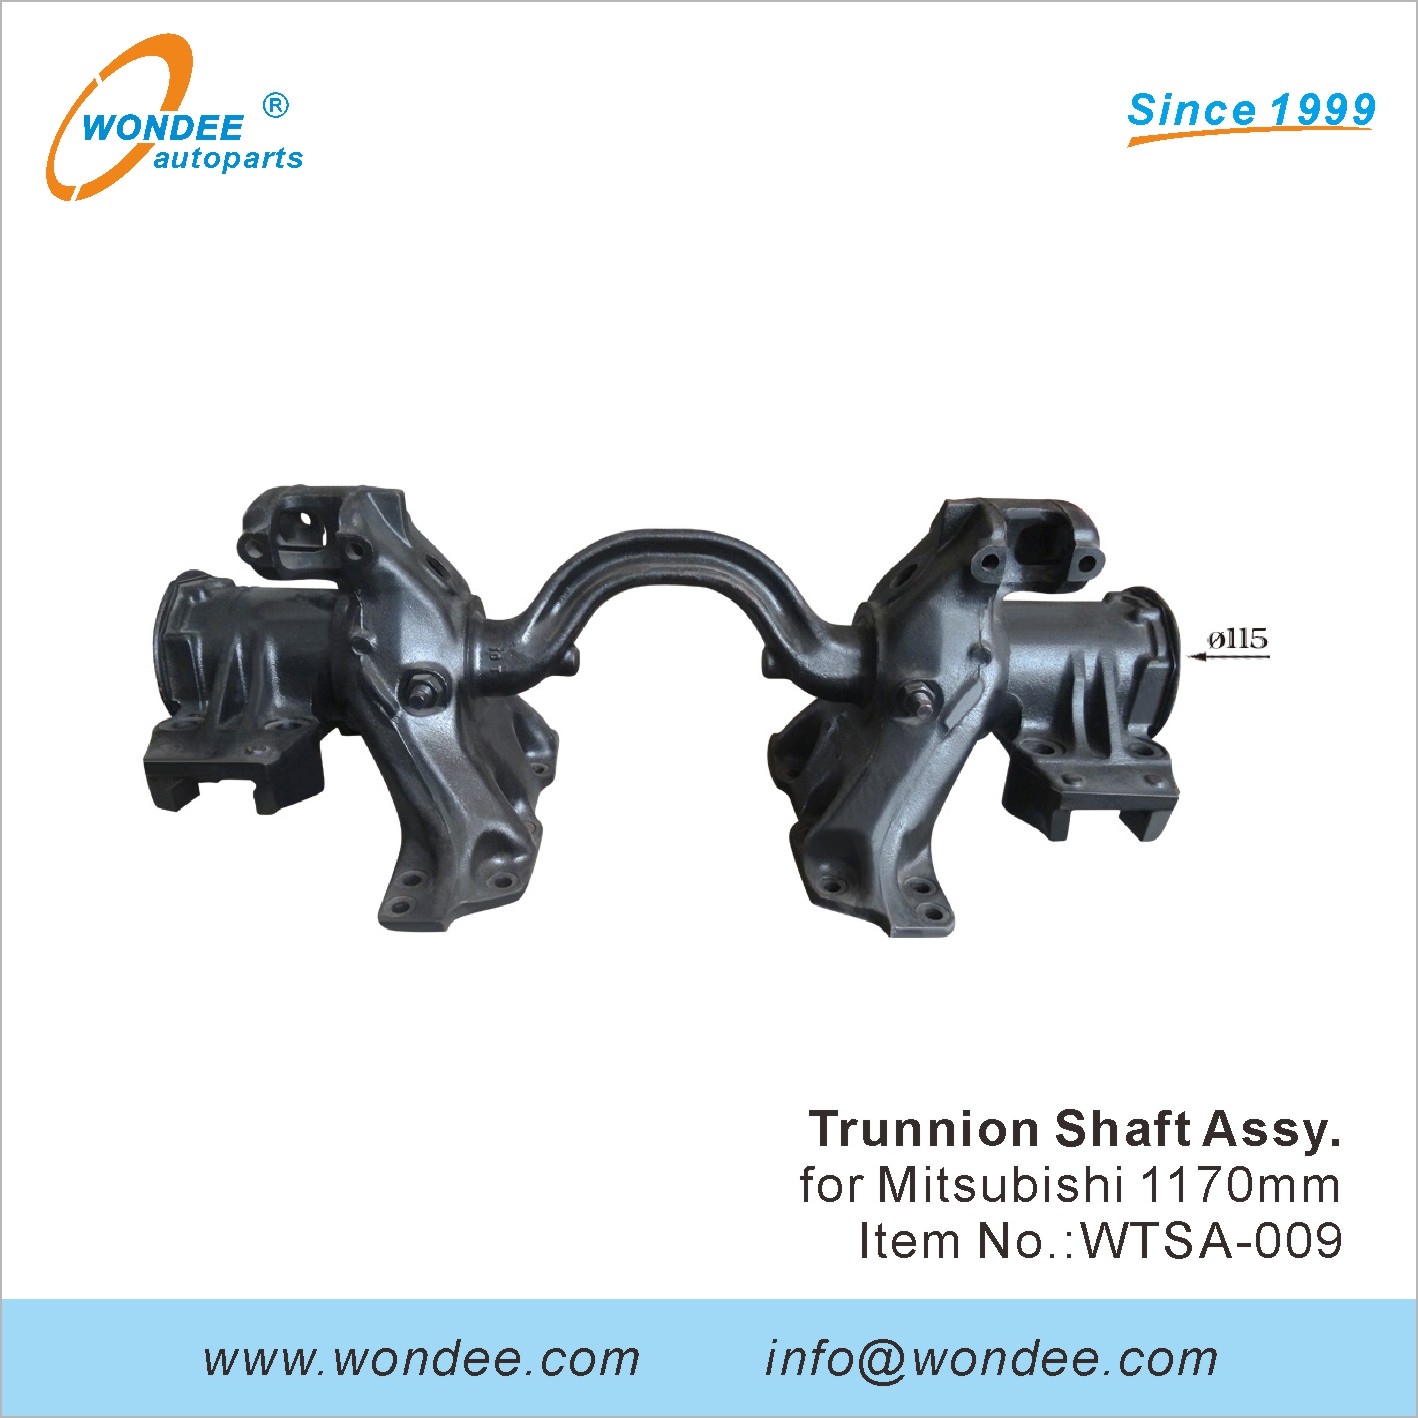 WONDEE trunnion shaft assembly (9)